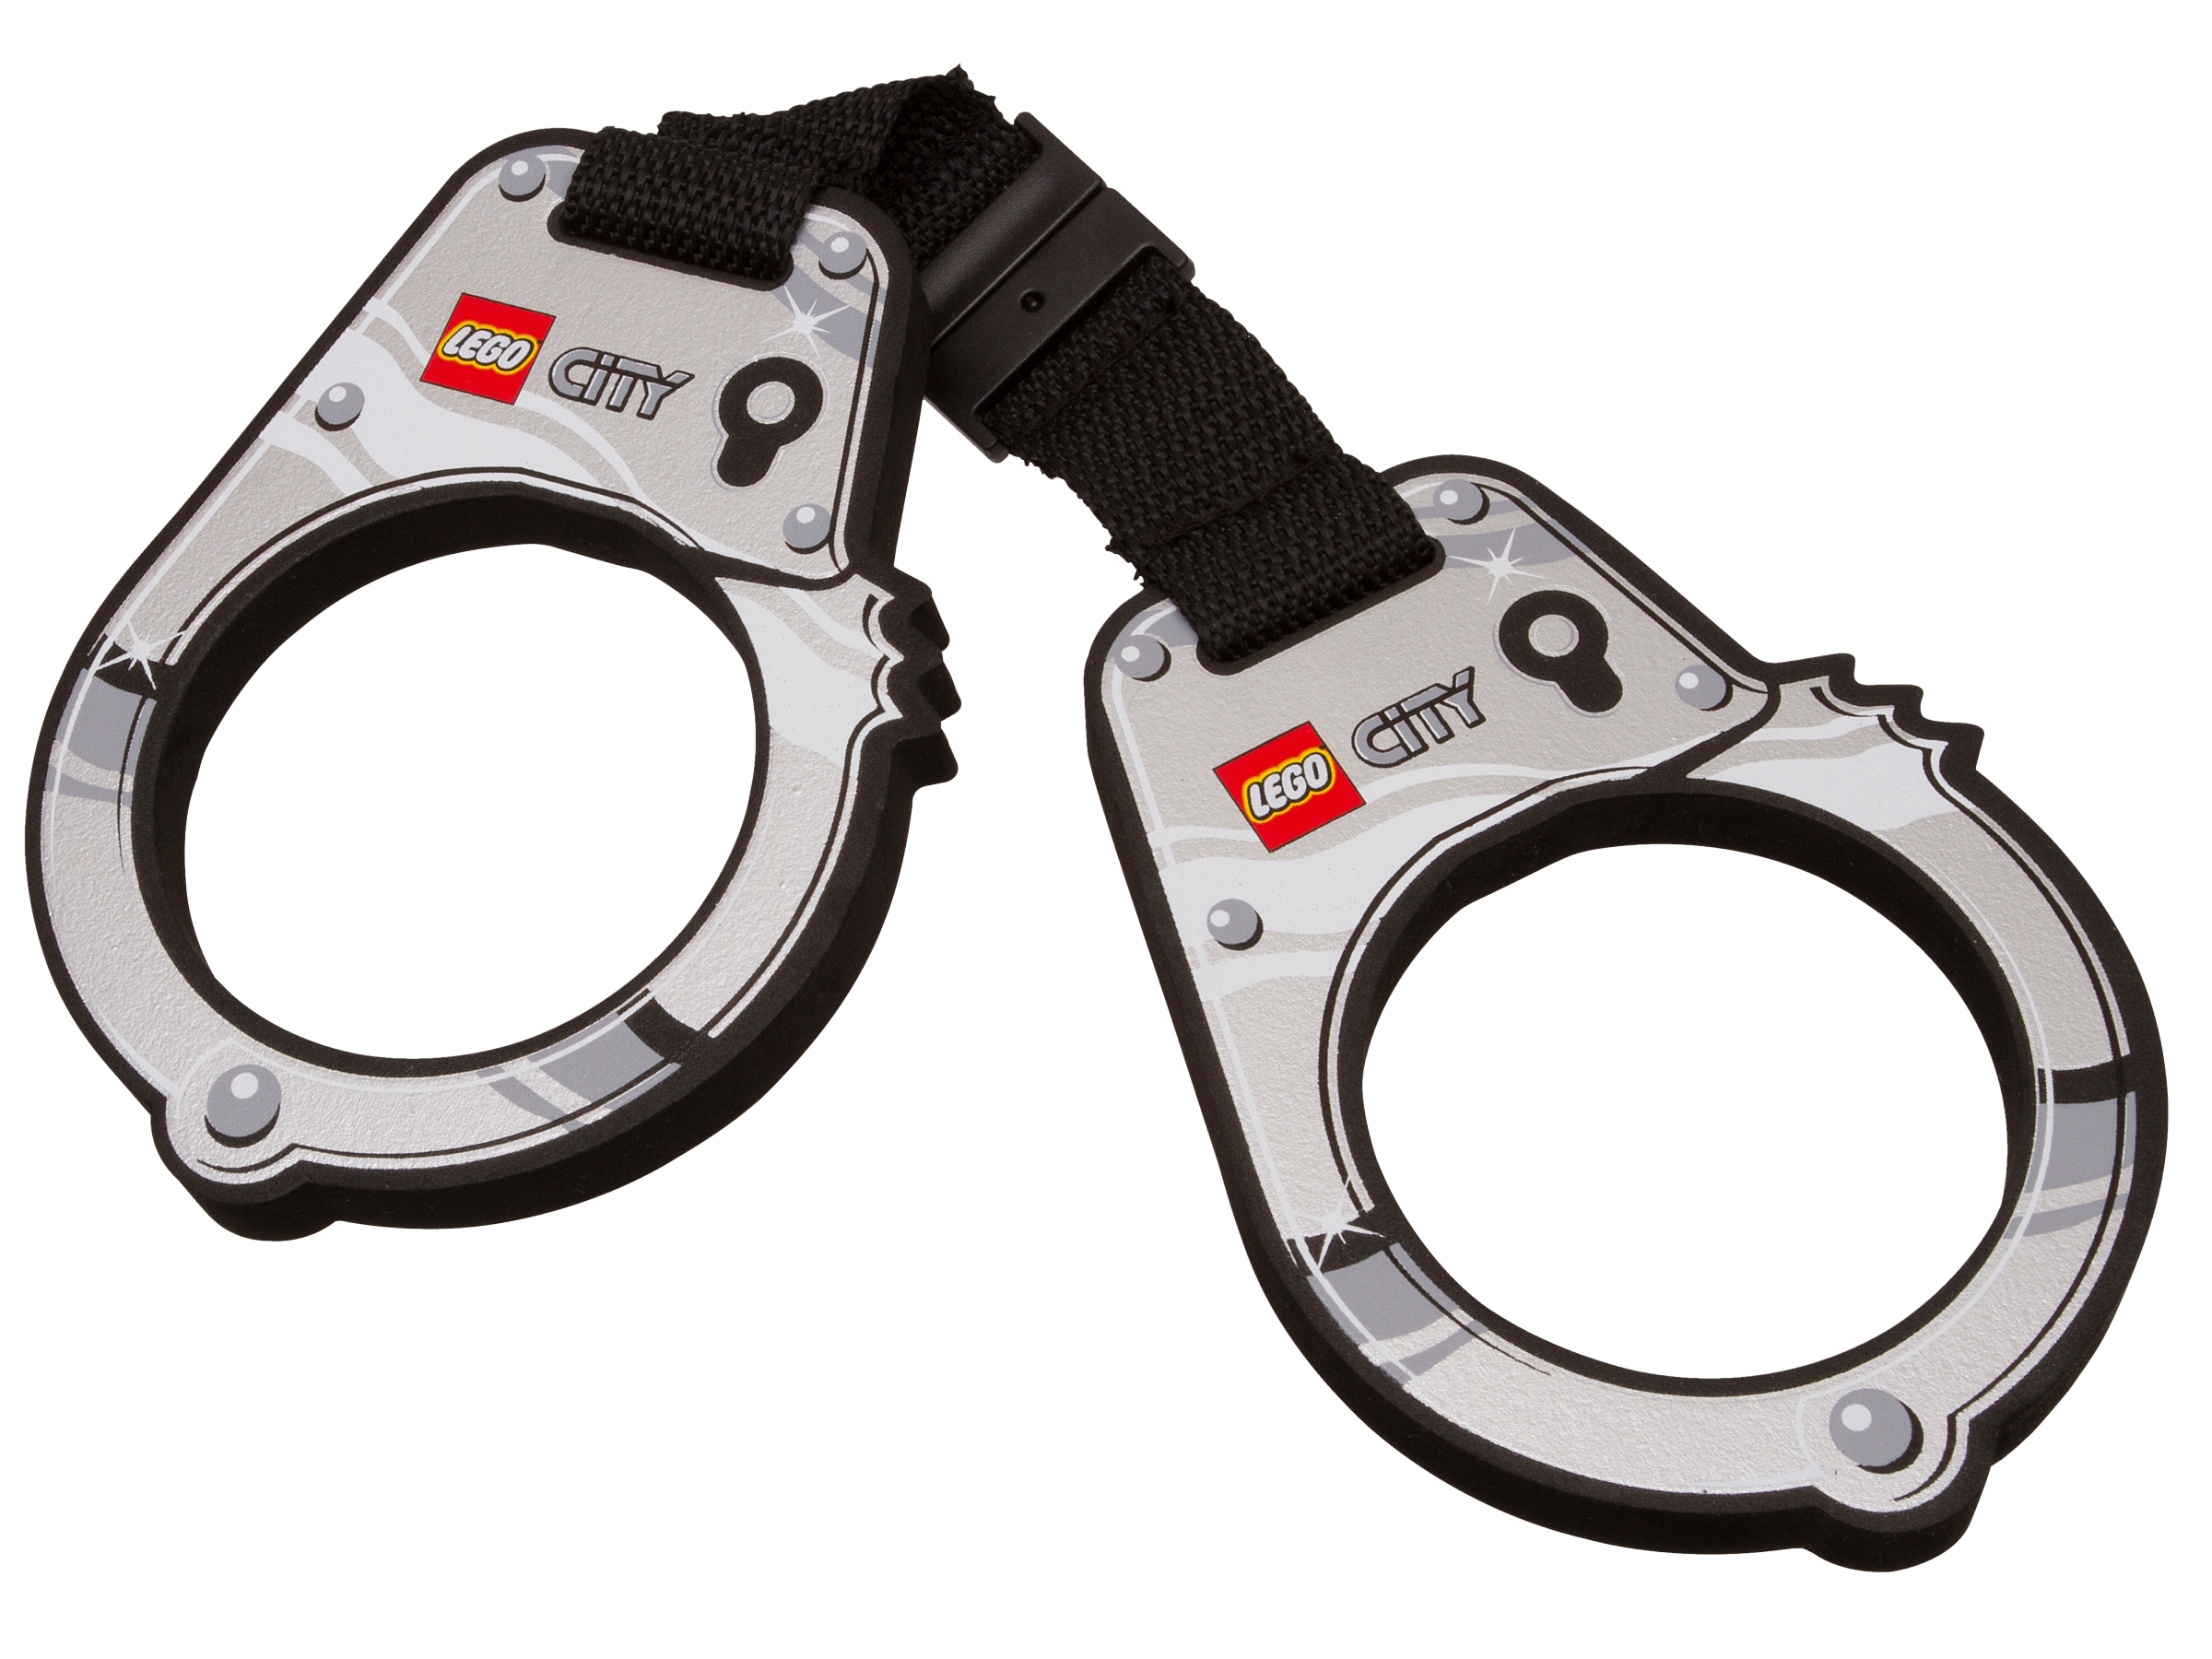 Detail Photo Of Handcuffs Nomer 31